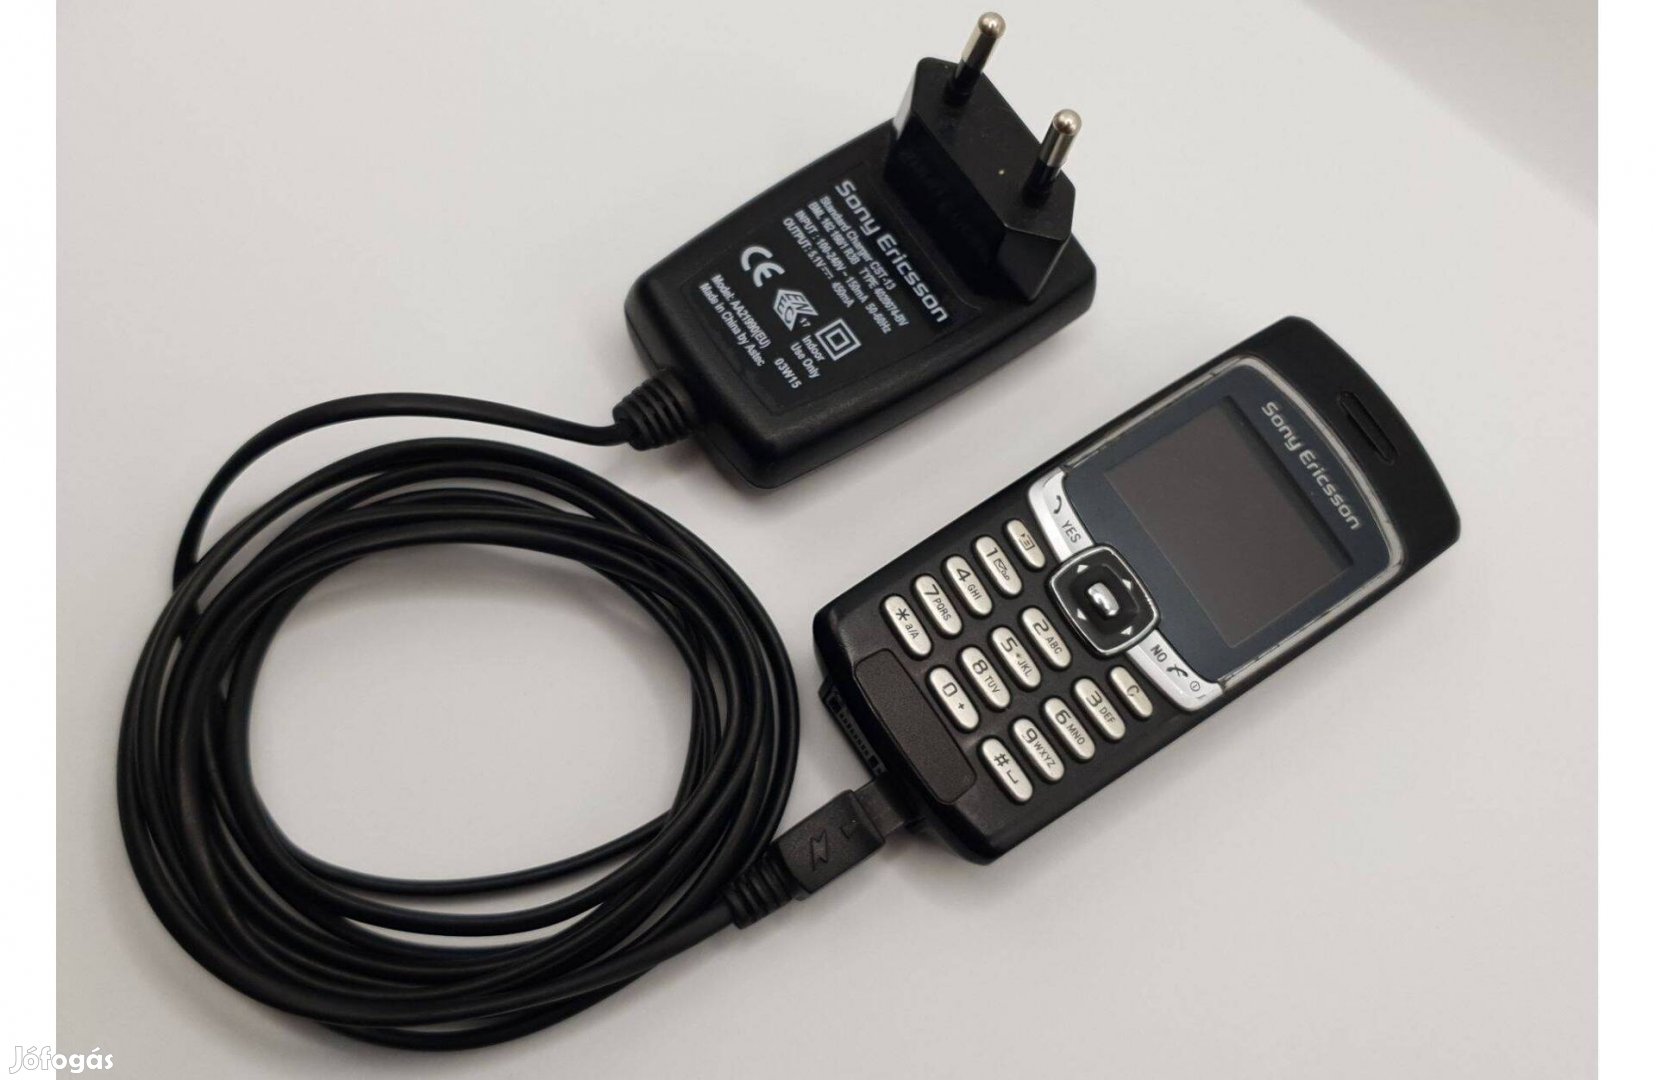 Sony Ericsson T290i mobiltelefon + tartozékok / mobil telefon Vodafone